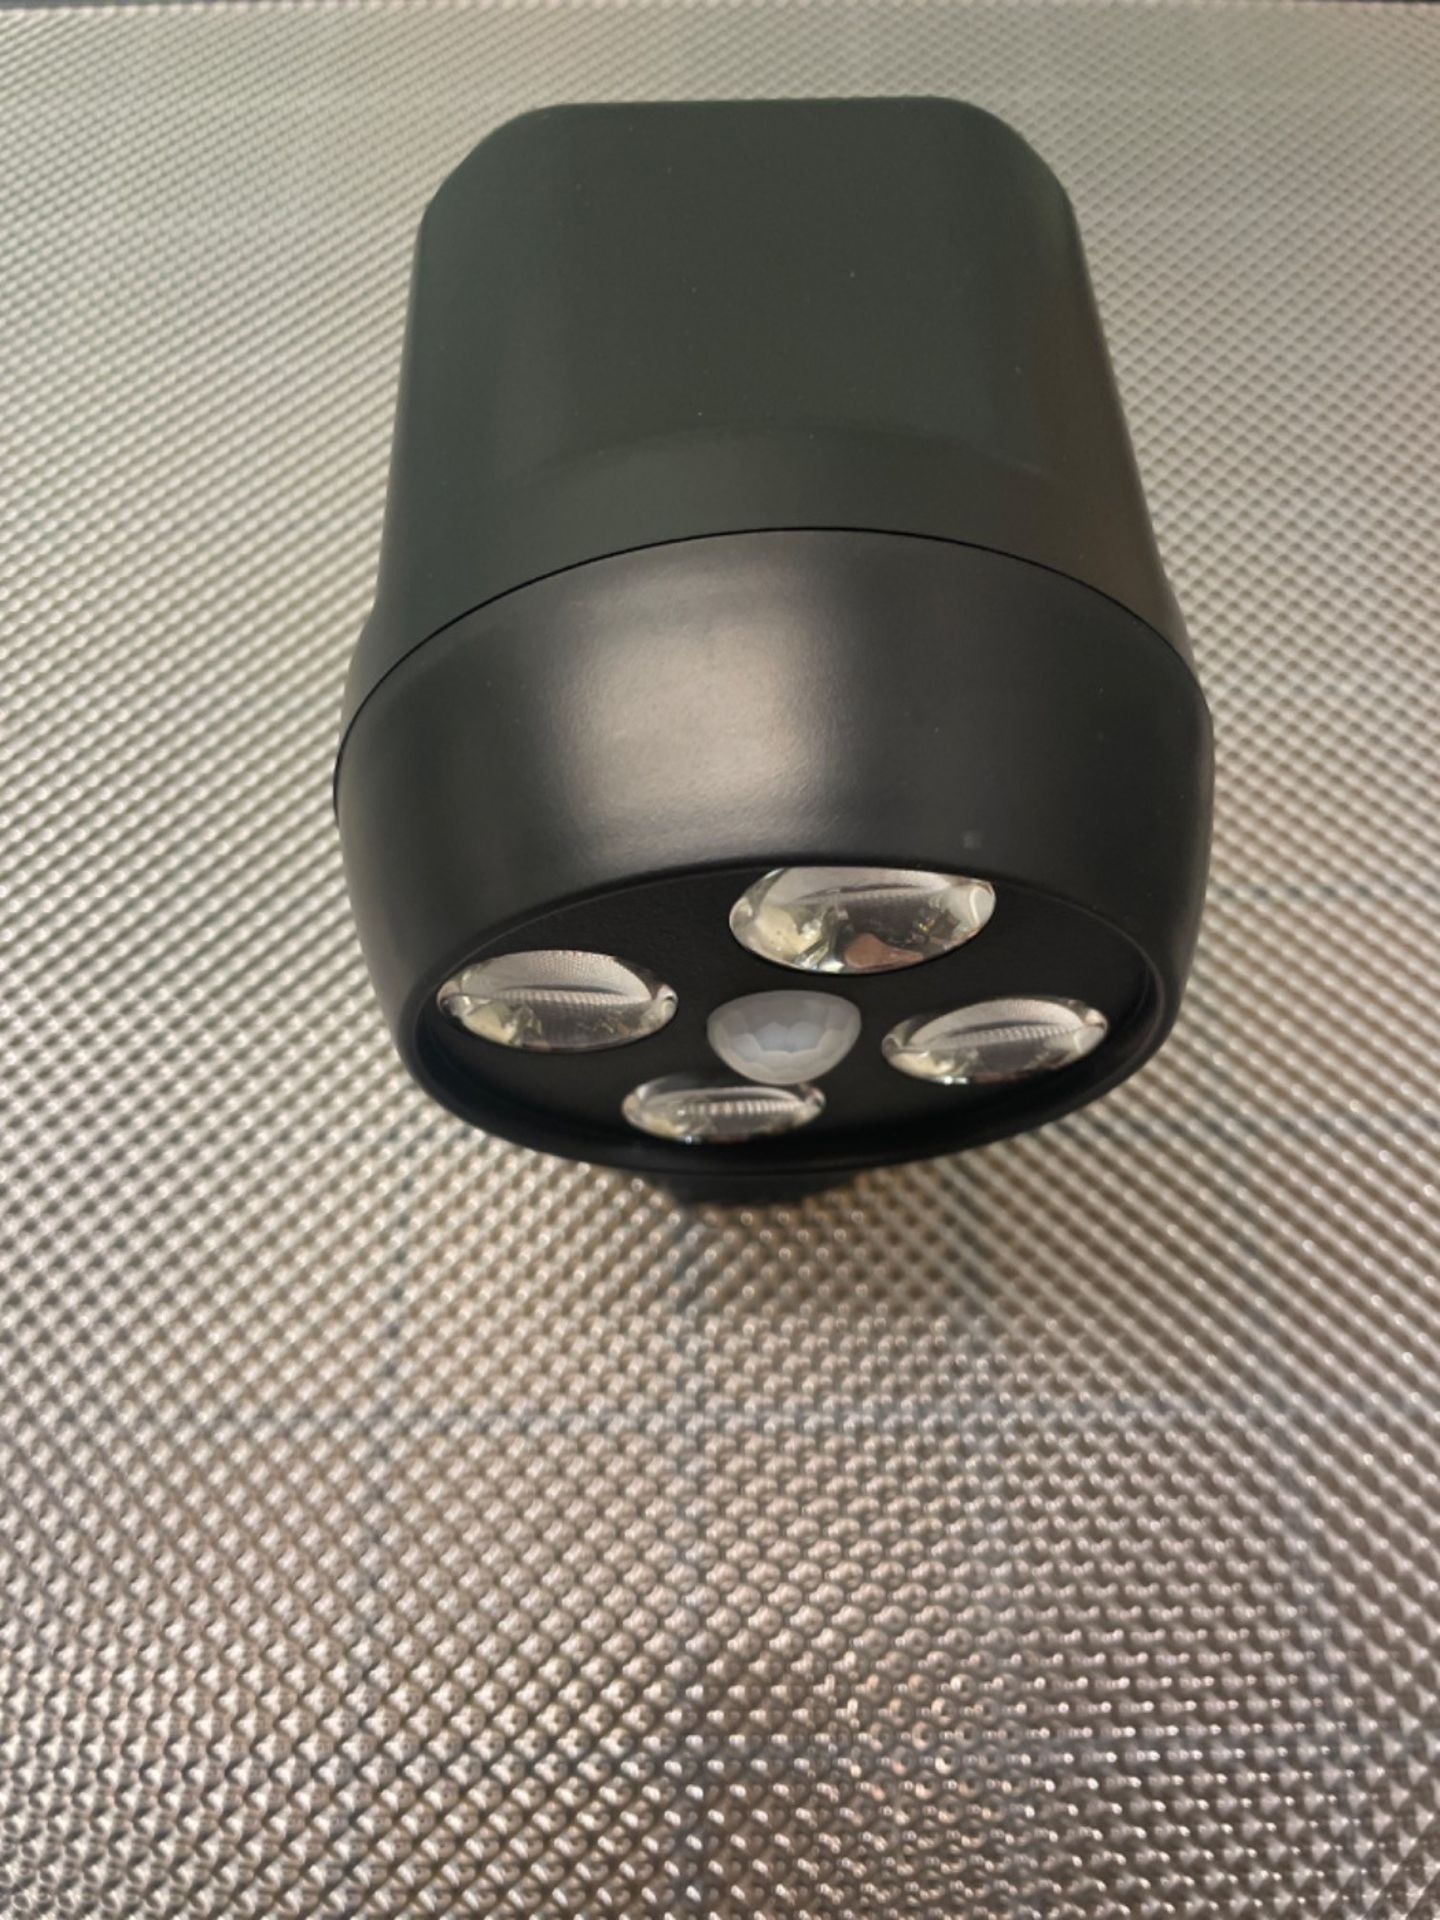 NICREW Battery Powered Outdoor LED Security Light 1 Pack, PIR Motion Sensor Spotlight, Weatherproof - Image 3 of 3